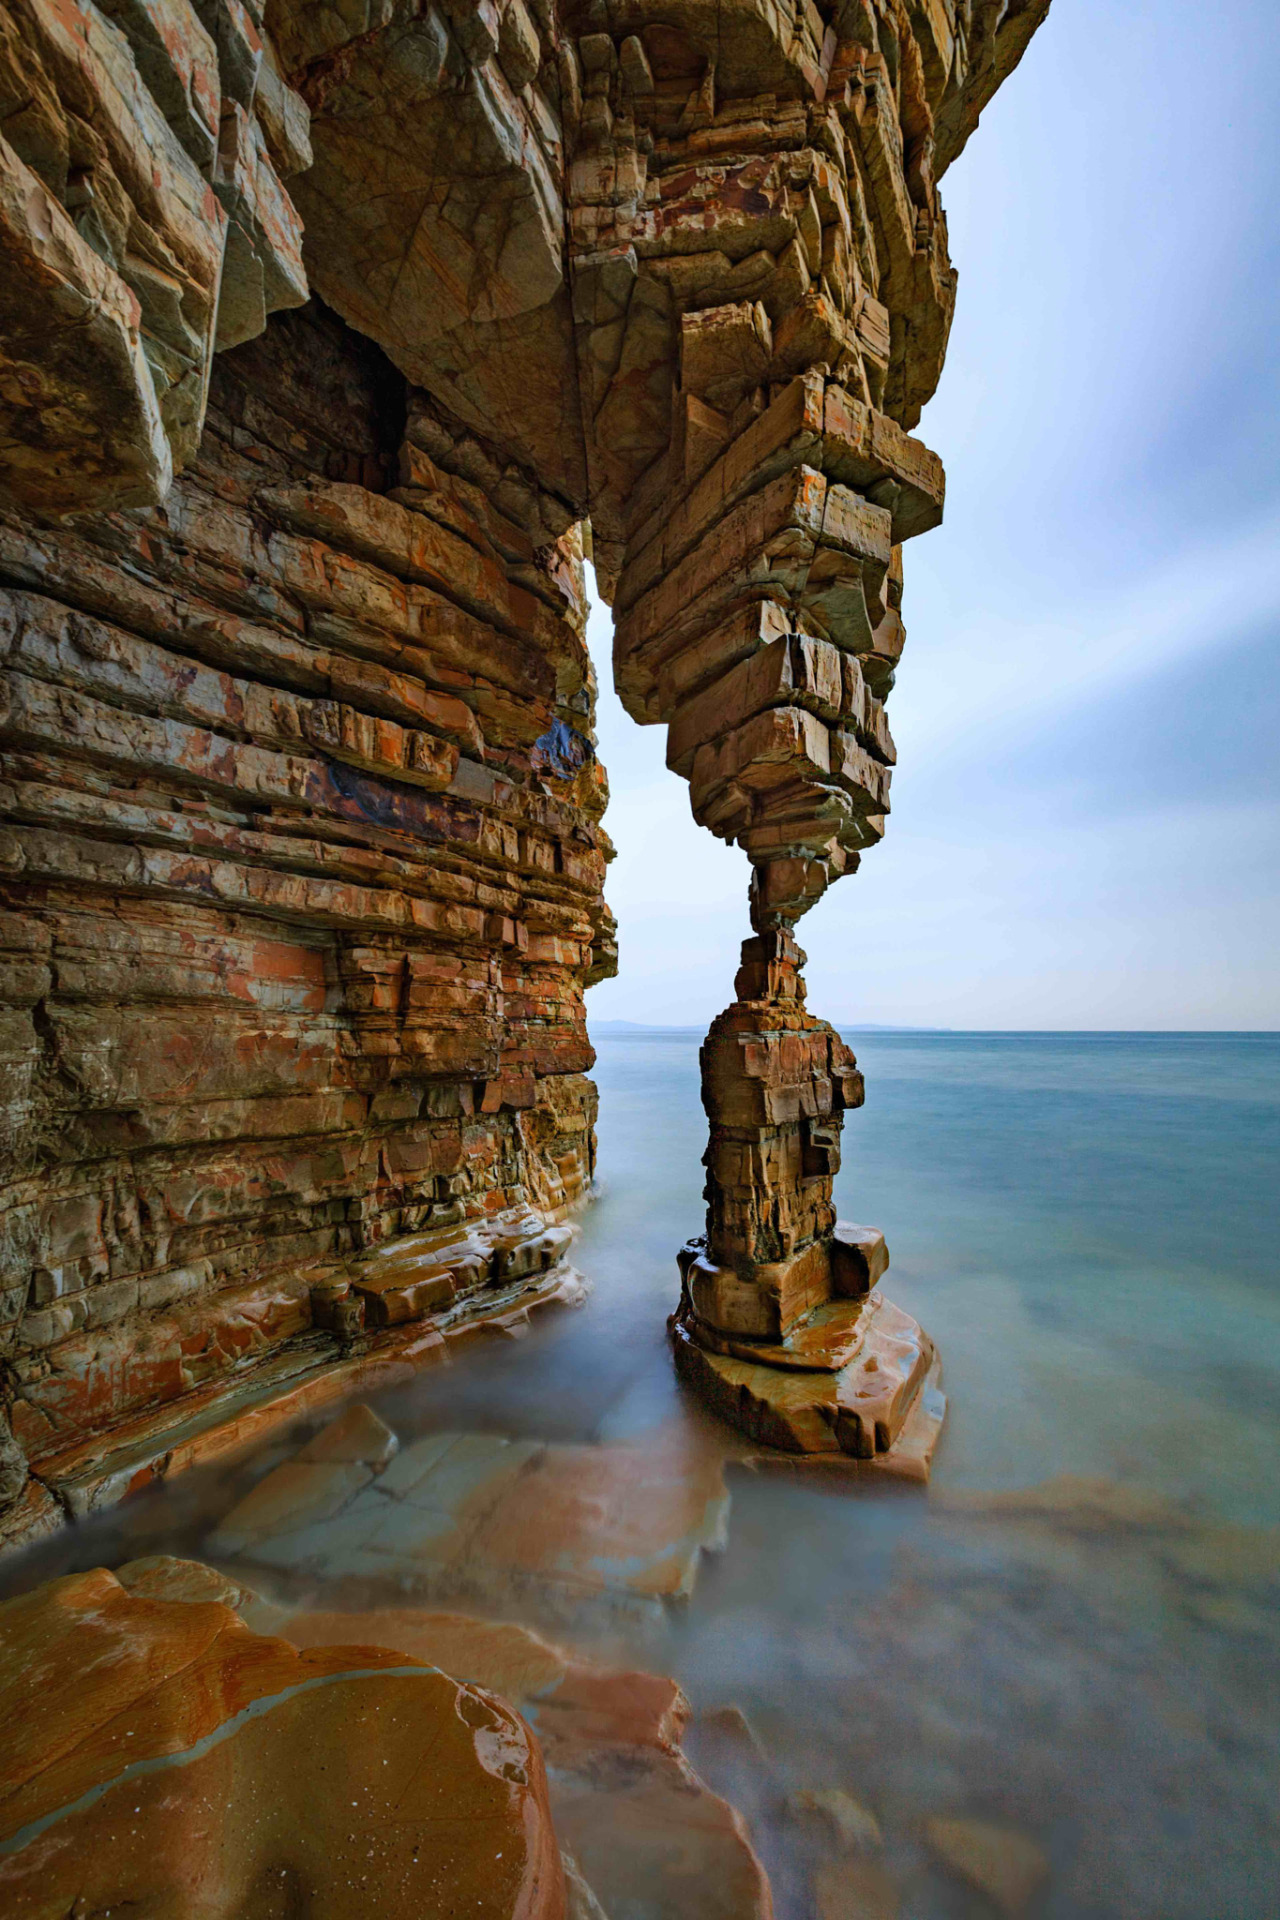 theencompassingworld:
“ Table Leg Rock, Dalian, China
More of our amazing world
”